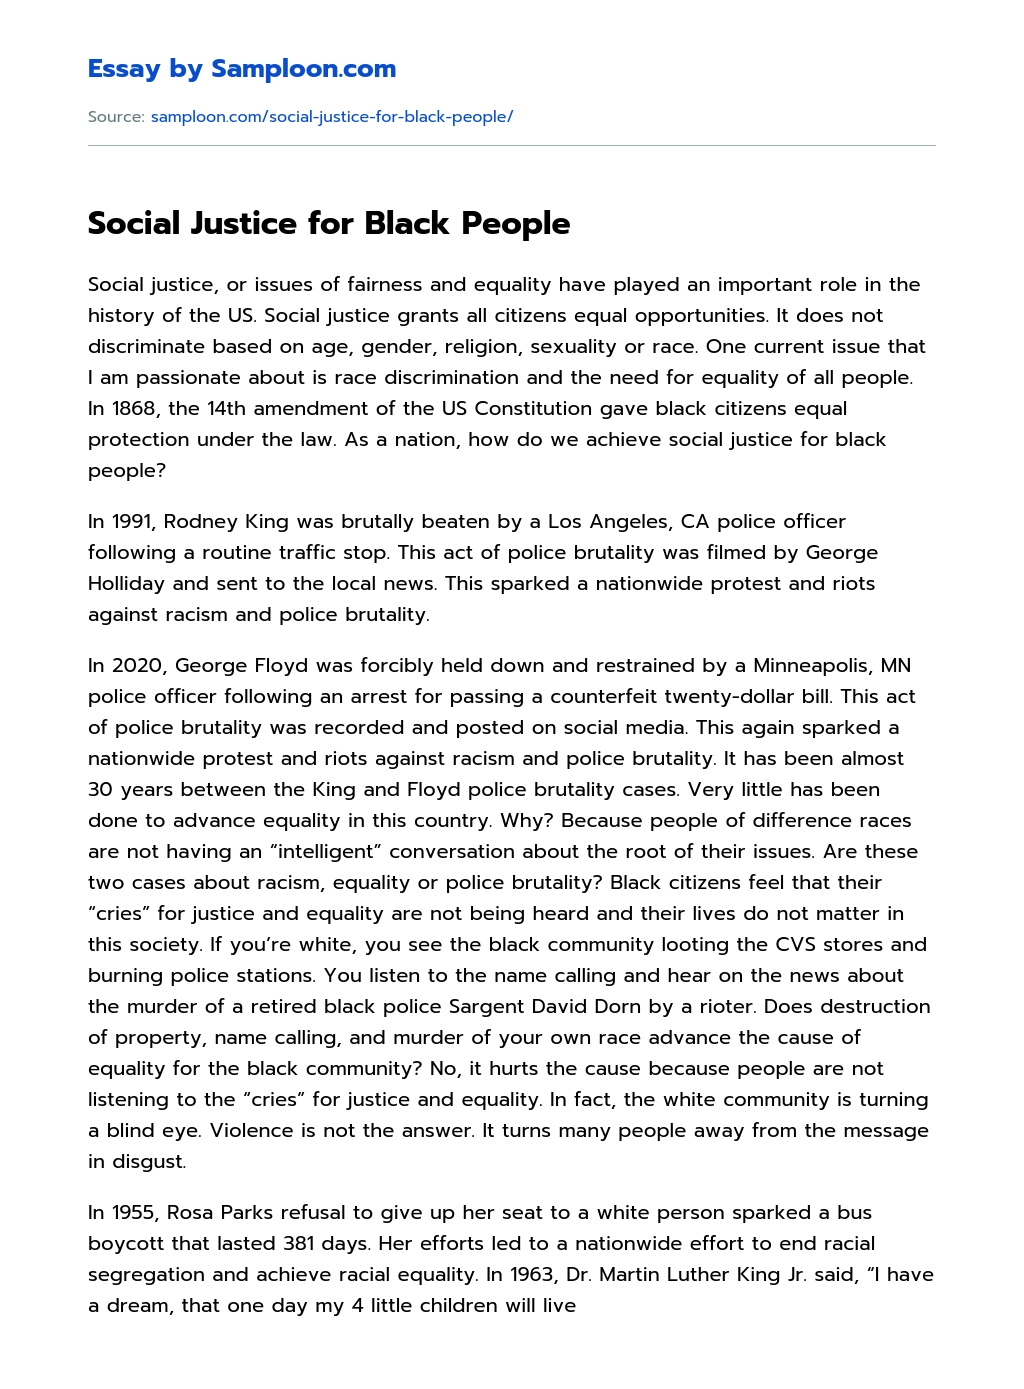 Social Justice for Black People essay